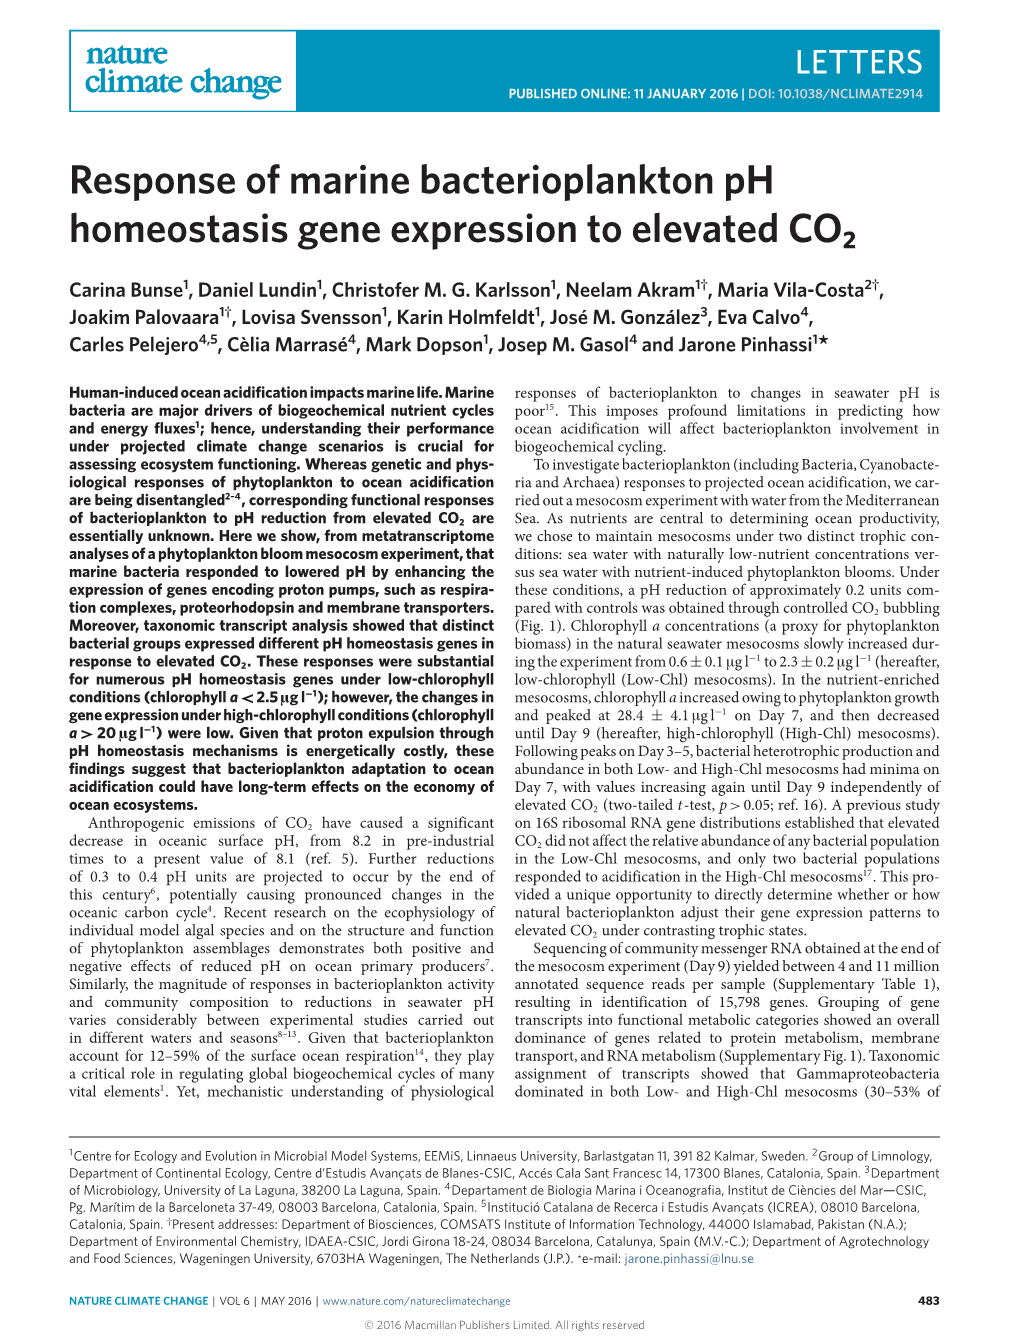 Response of Marine Bacterioplankton Ph Homeostasis Gene Expression to Elevated CO2